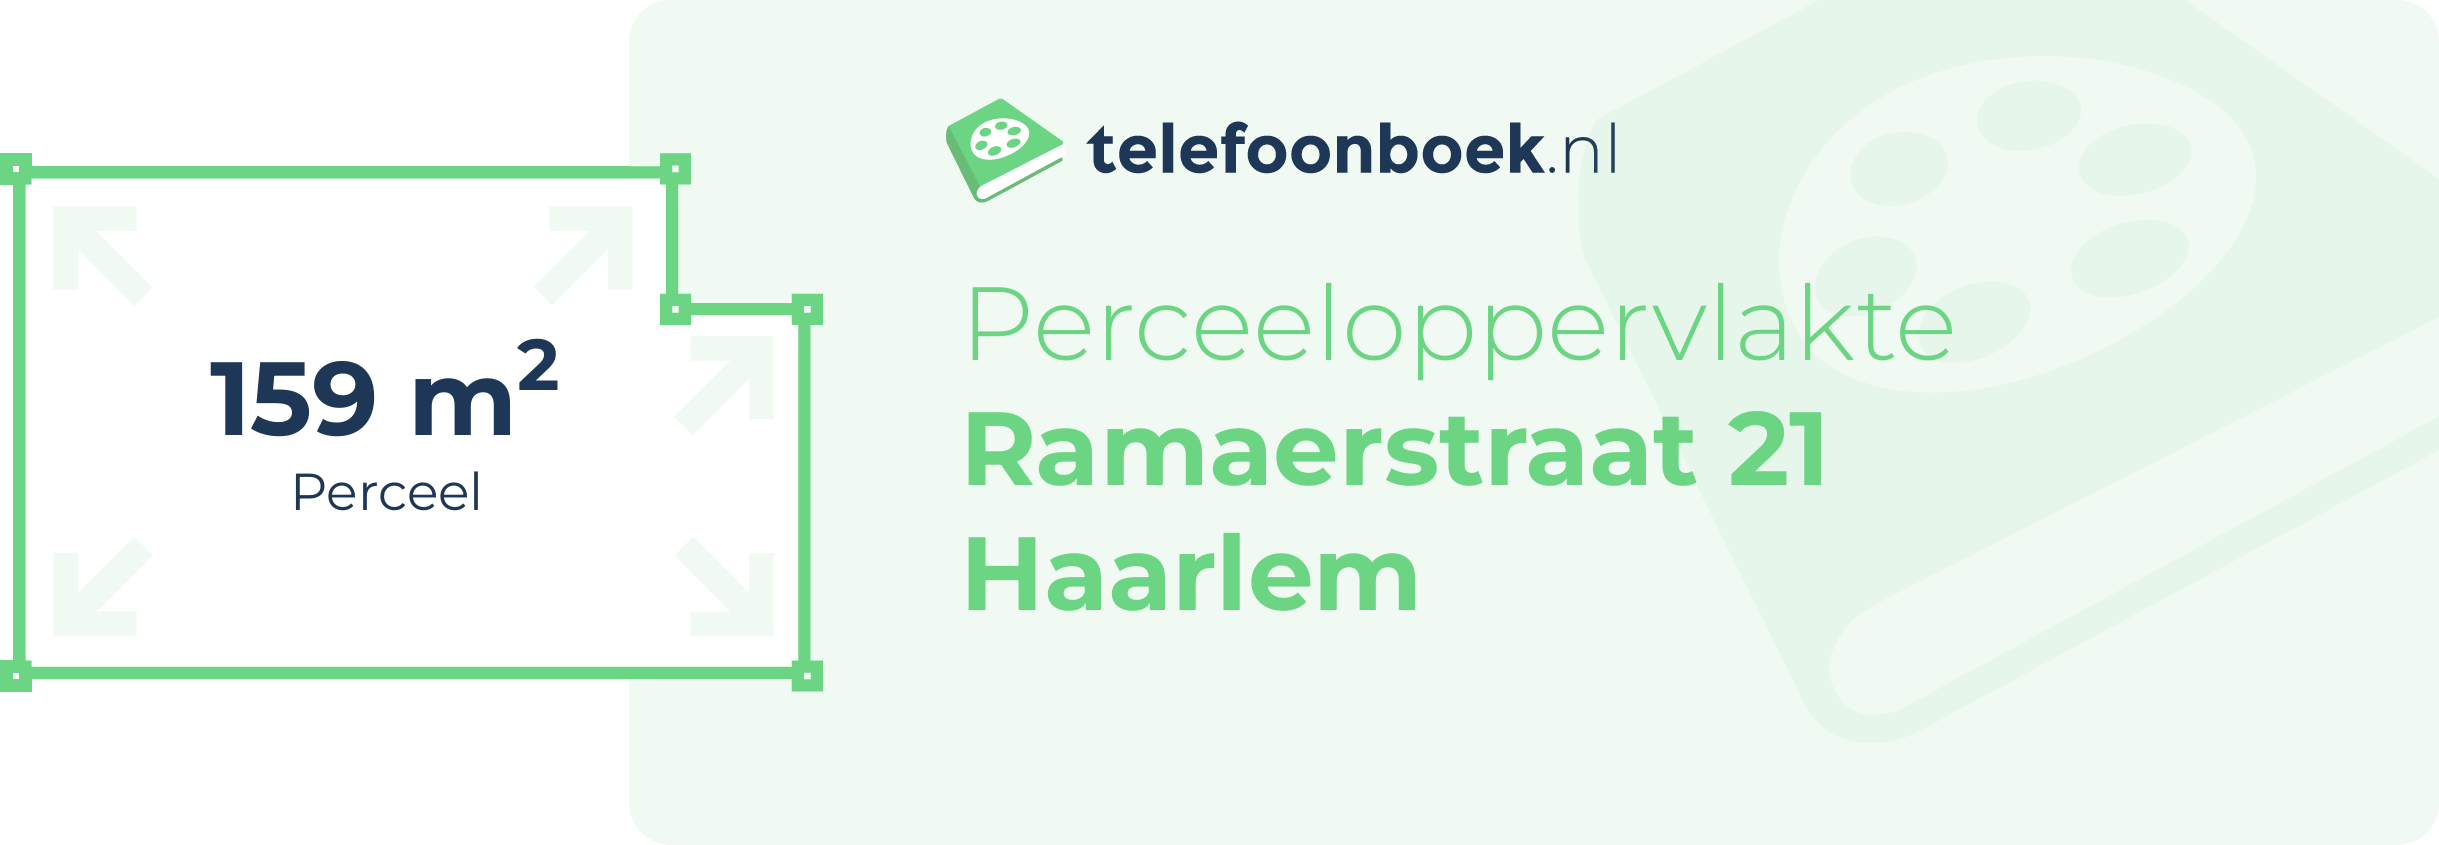 Perceeloppervlakte Ramaerstraat 21 Haarlem